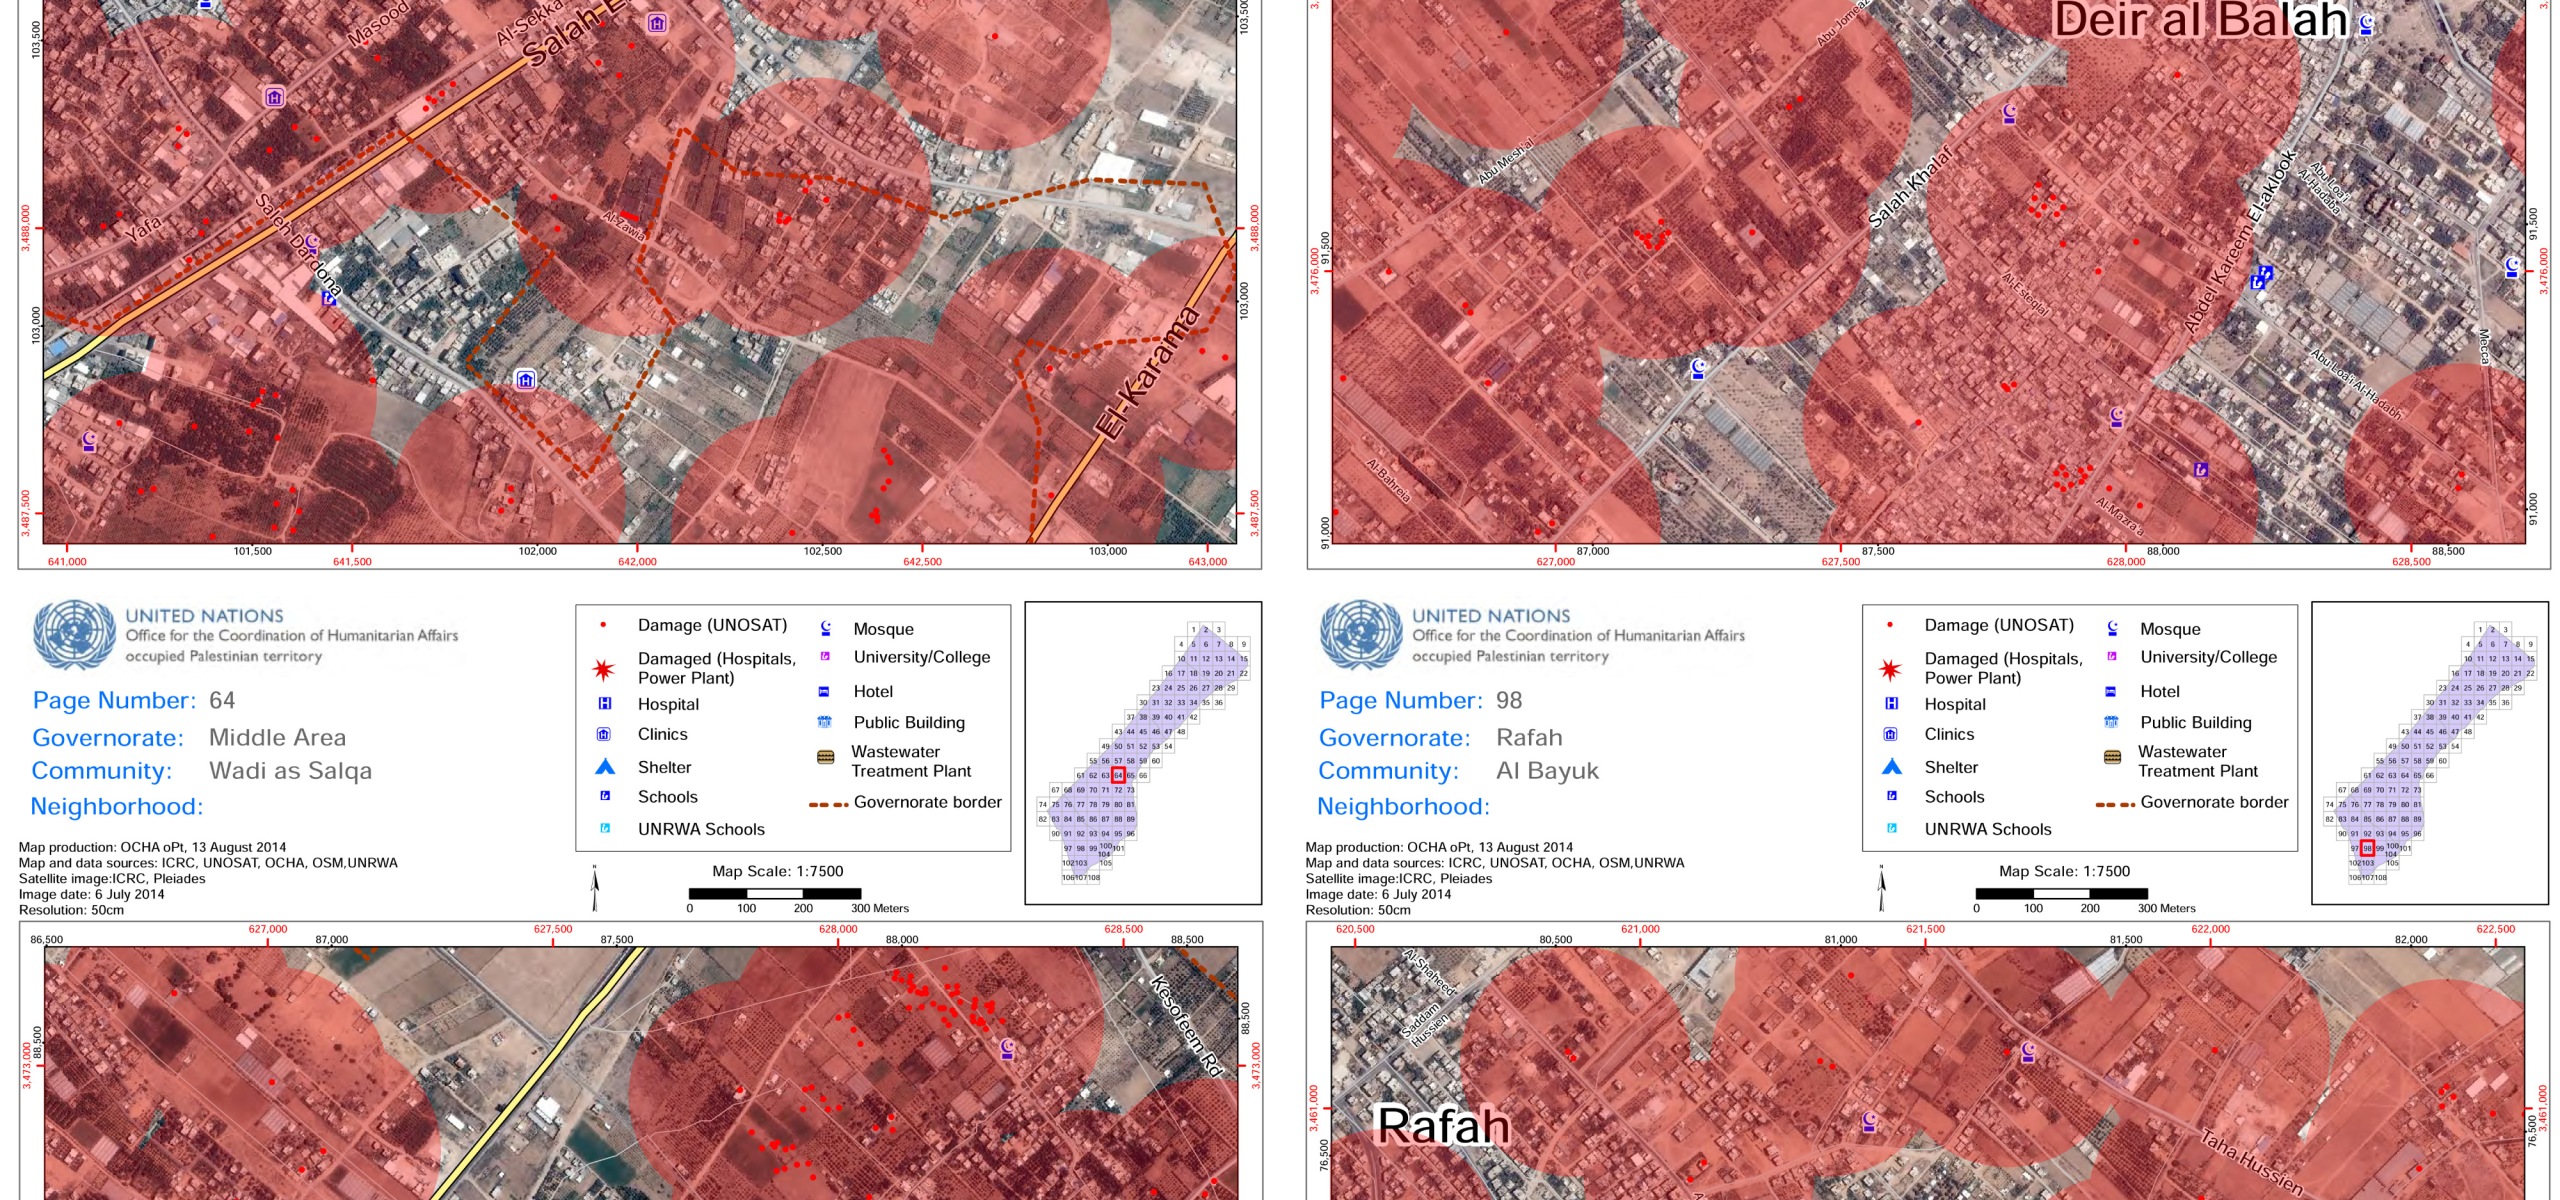 http://thefunambulist.net/2014/08/15/palestine-cartographic-representation-of-the-bombings-atmospheric-impact-in-gaza/